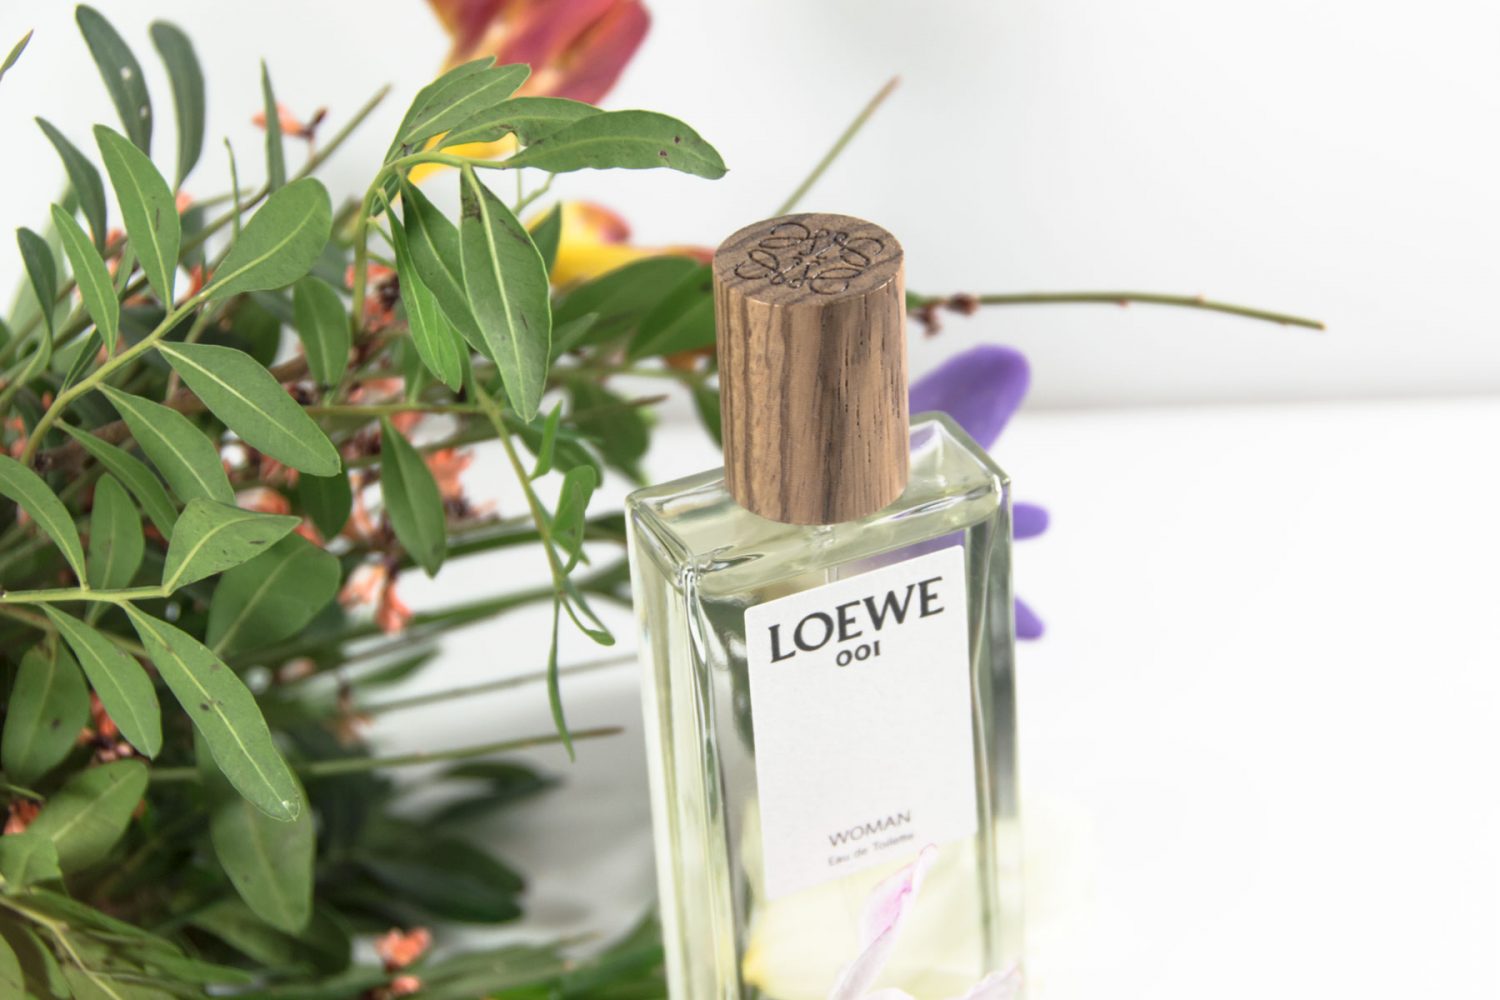 Loewe 001 Woman – Marie-Theres Schindler – Beauty Blog